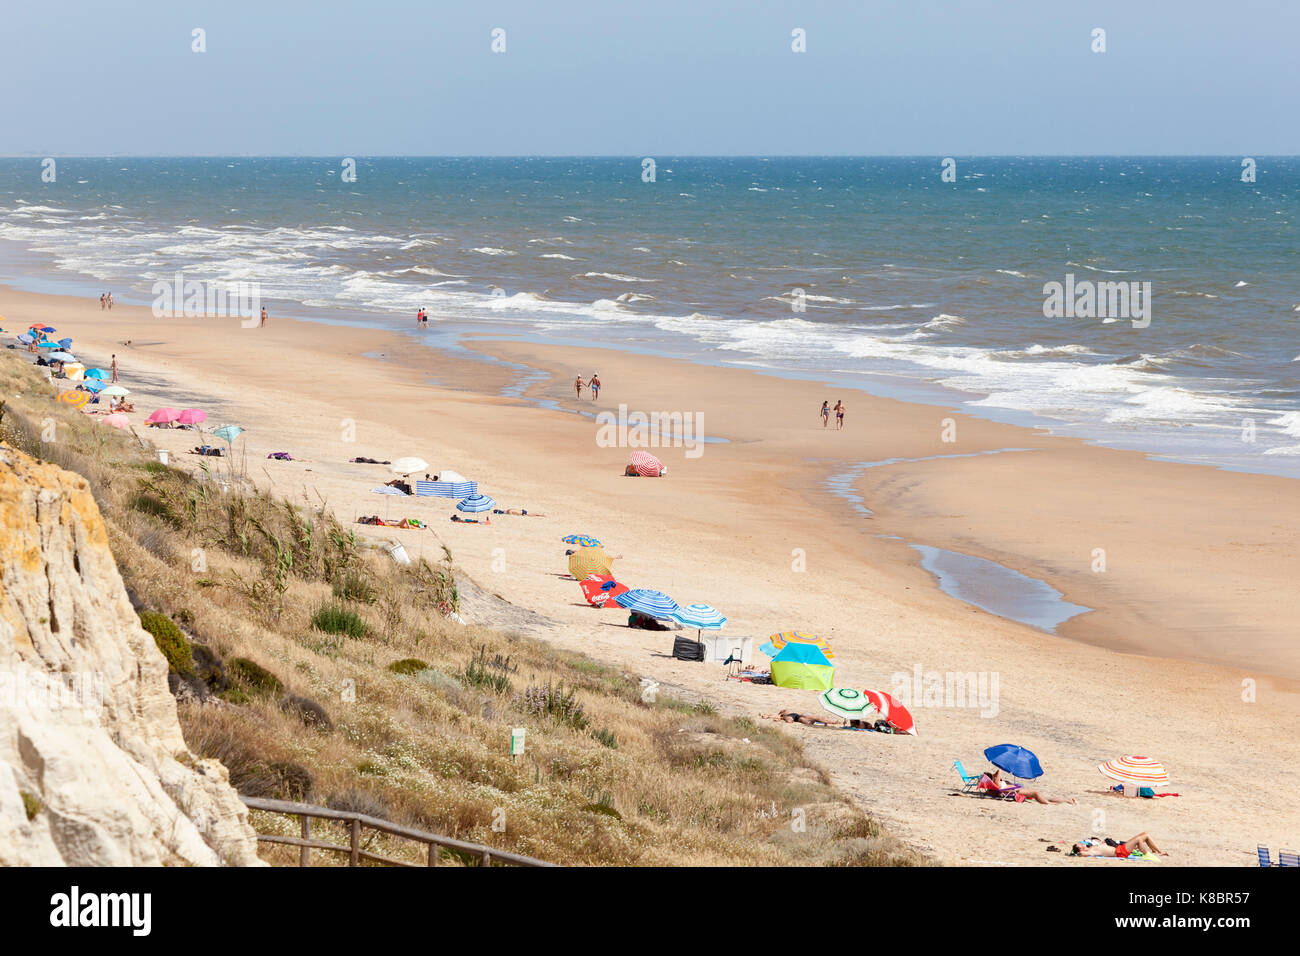 Playa del Asperillo beach in Matalascanas. Donana Natural Park, Huelva province, Costa de la Luz, Andalusia, Spain Stock Photo